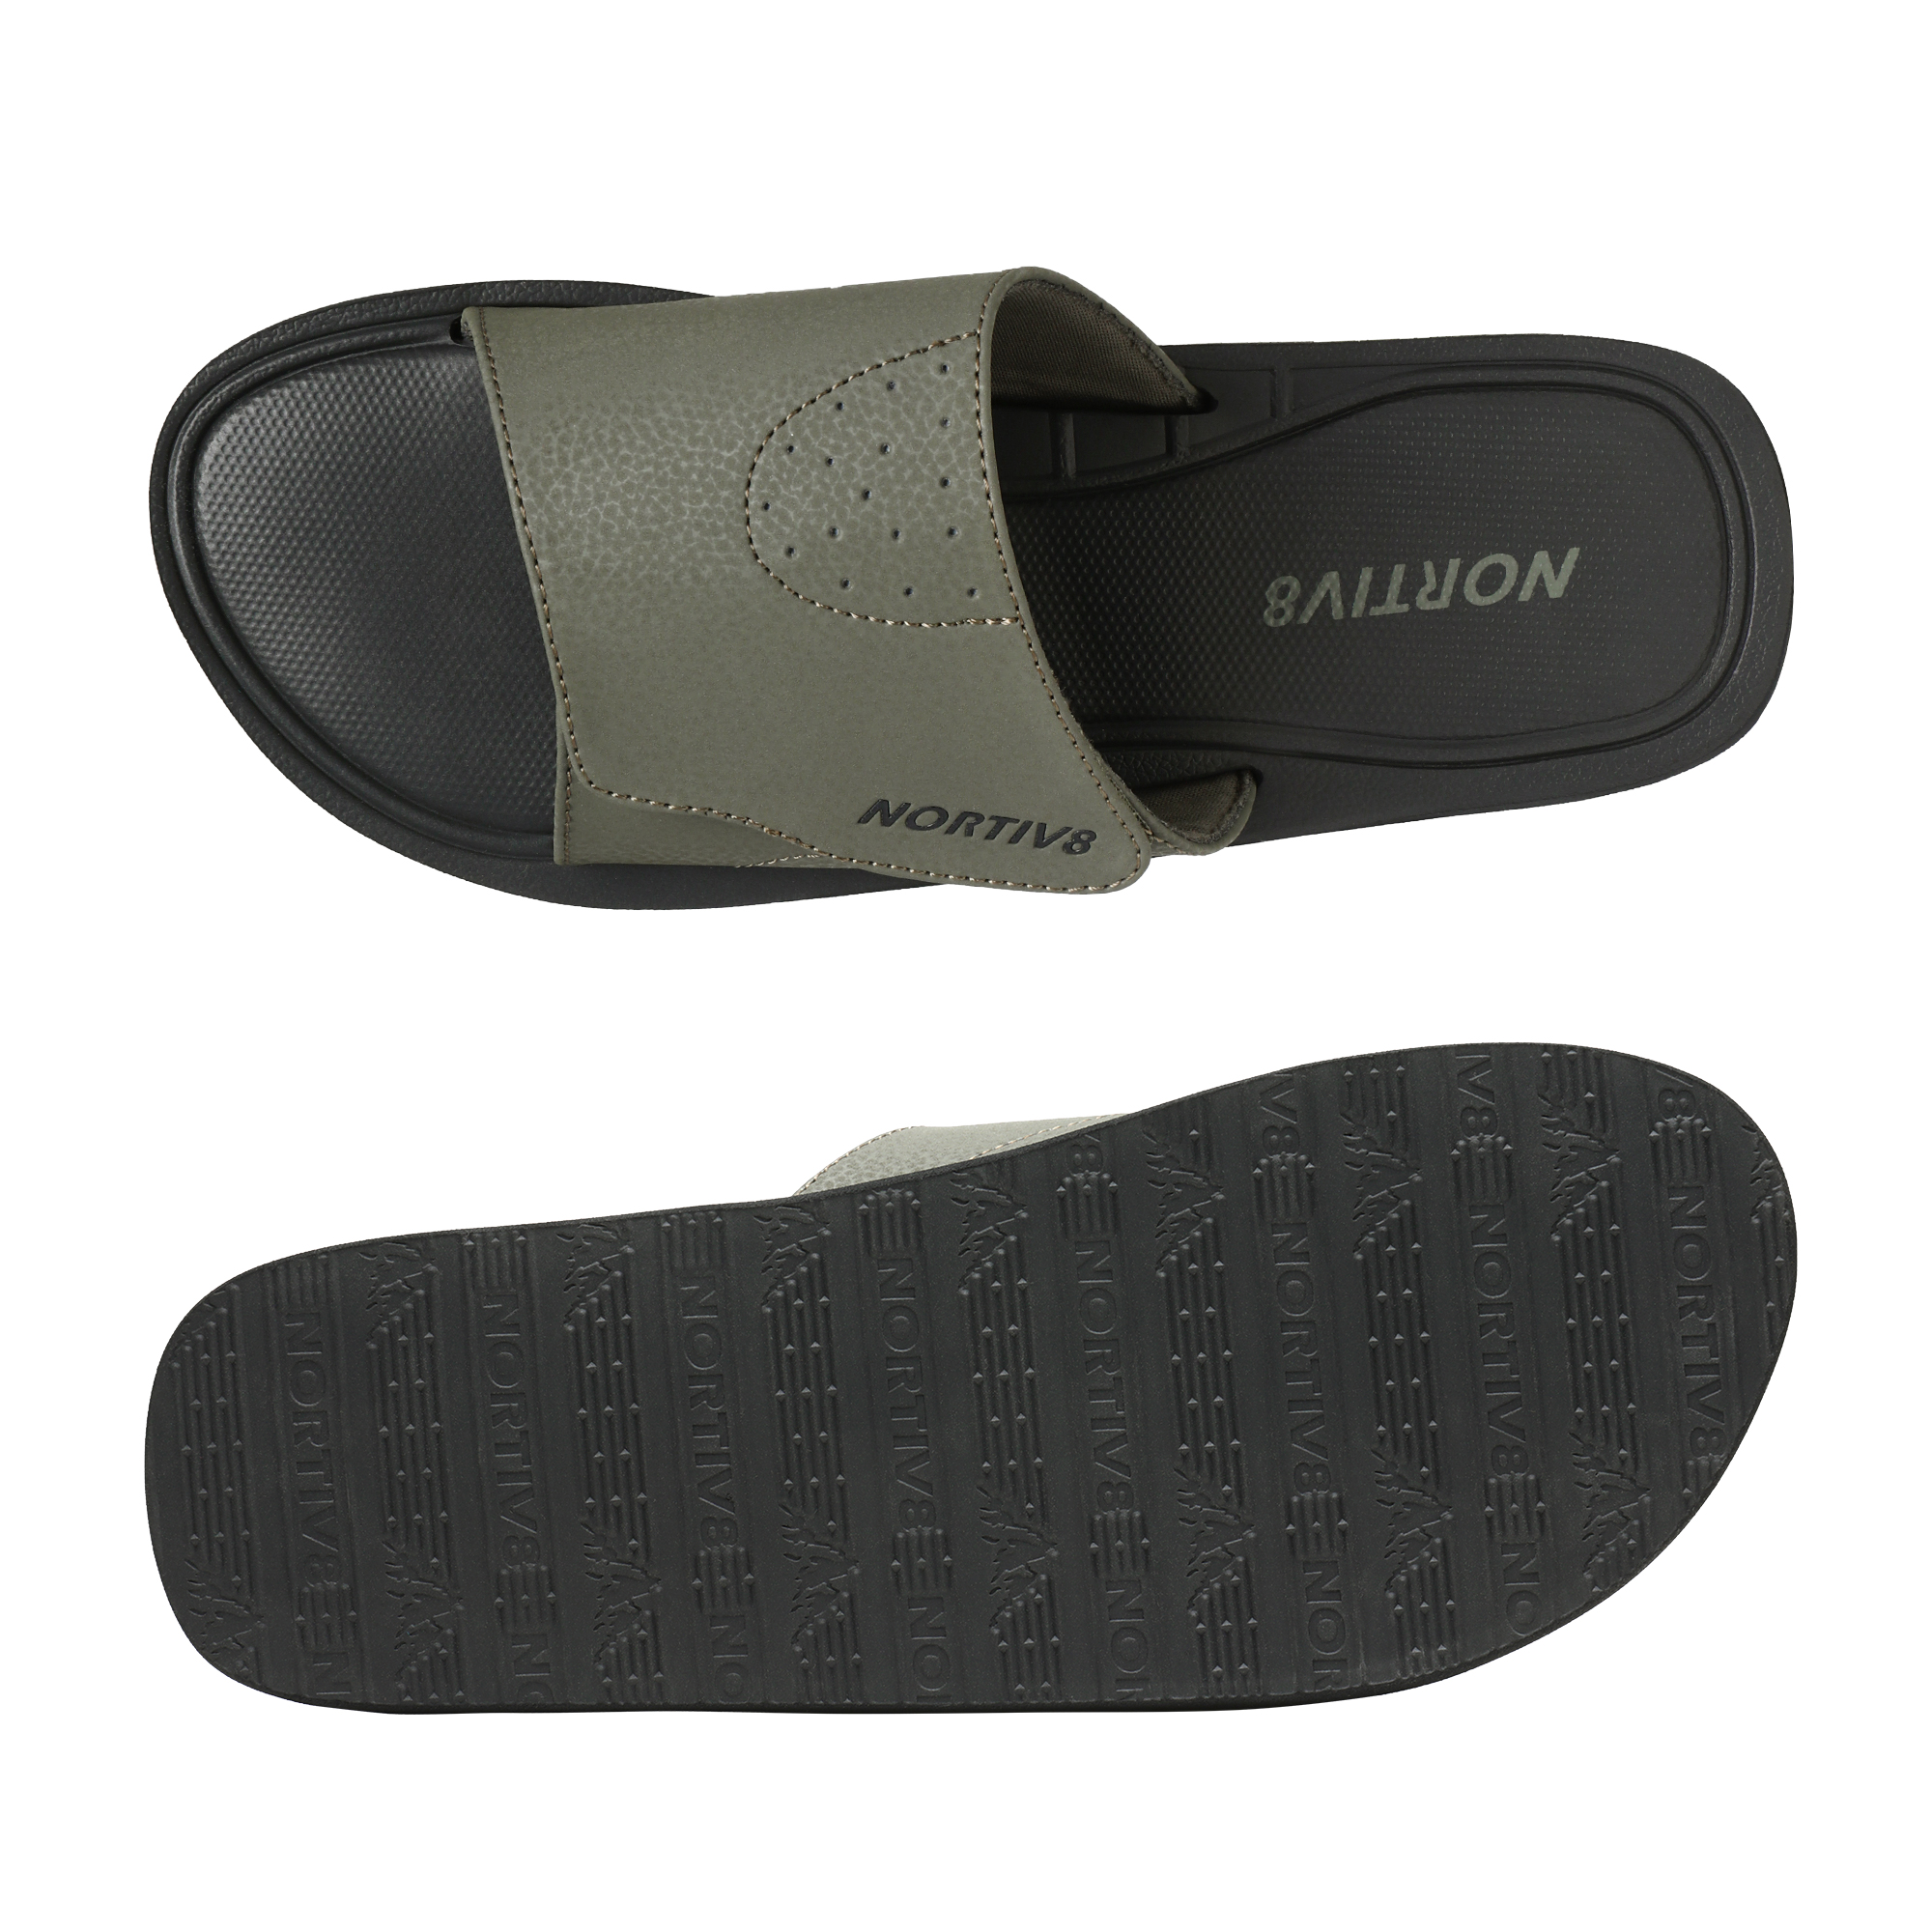 Nortiv8 Men's Memory Foam Adjustable Slide Sandals Comfort Lightweight Summer Beach Sandals Shoes FUSION OLIVE/GREEN Size 8 - image 3 of 5